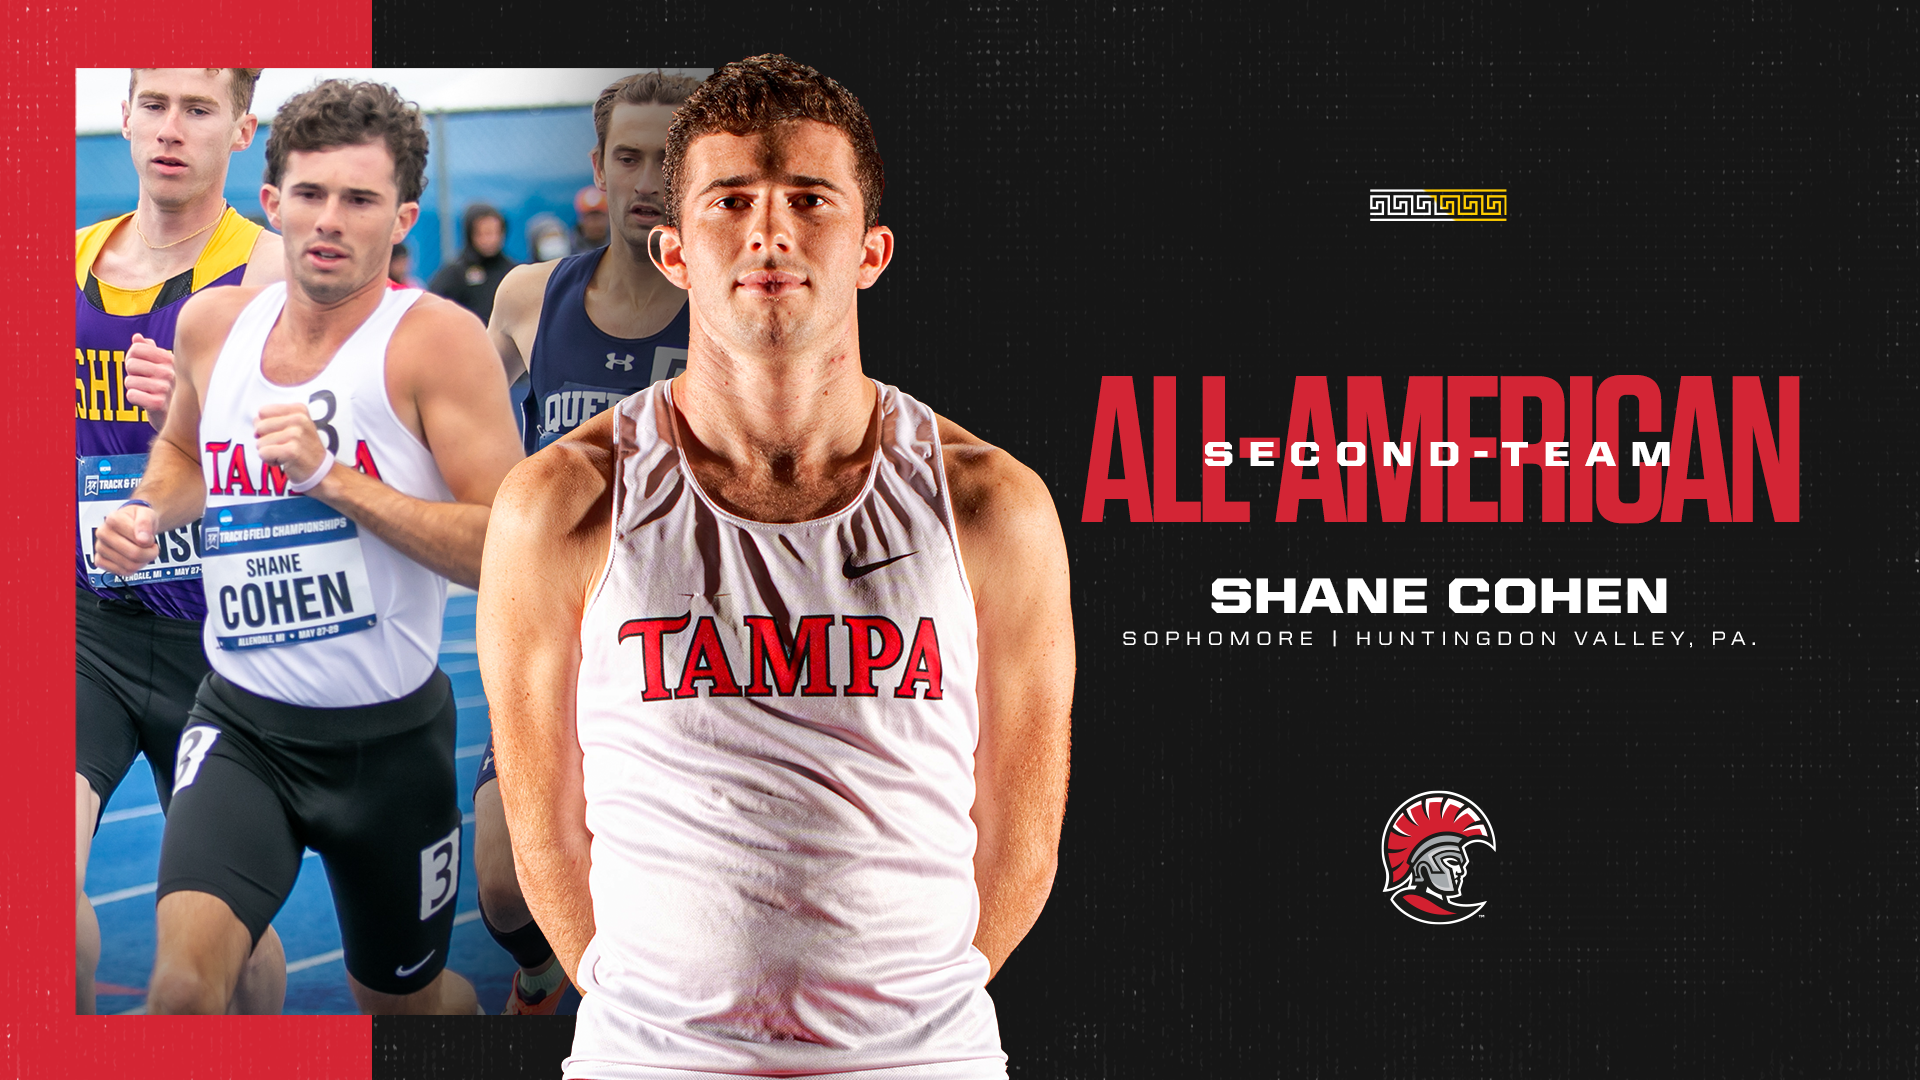 2021 USTFCCCA All-American Shane Cohen